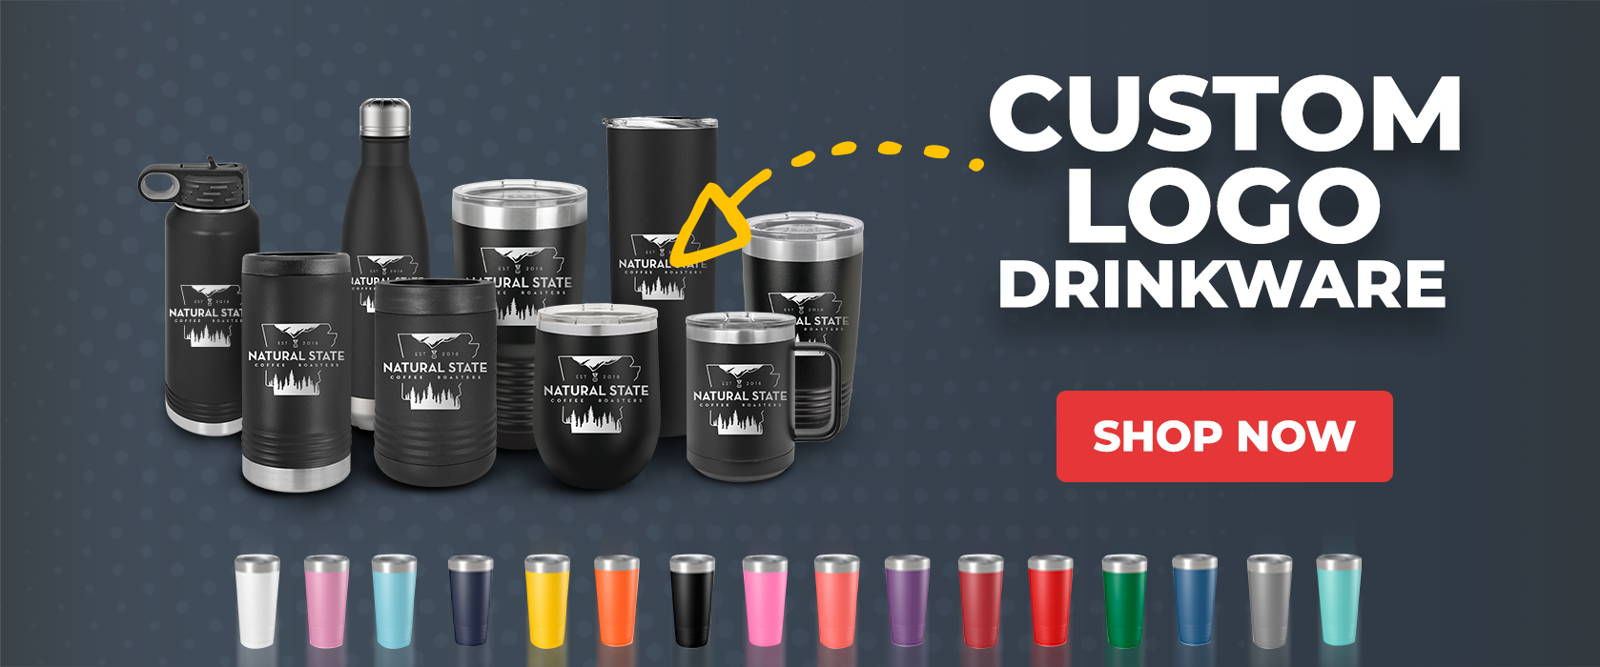 custom tumblers, kodiak custom, buy custom drinkware with logo, engraved logo mugs